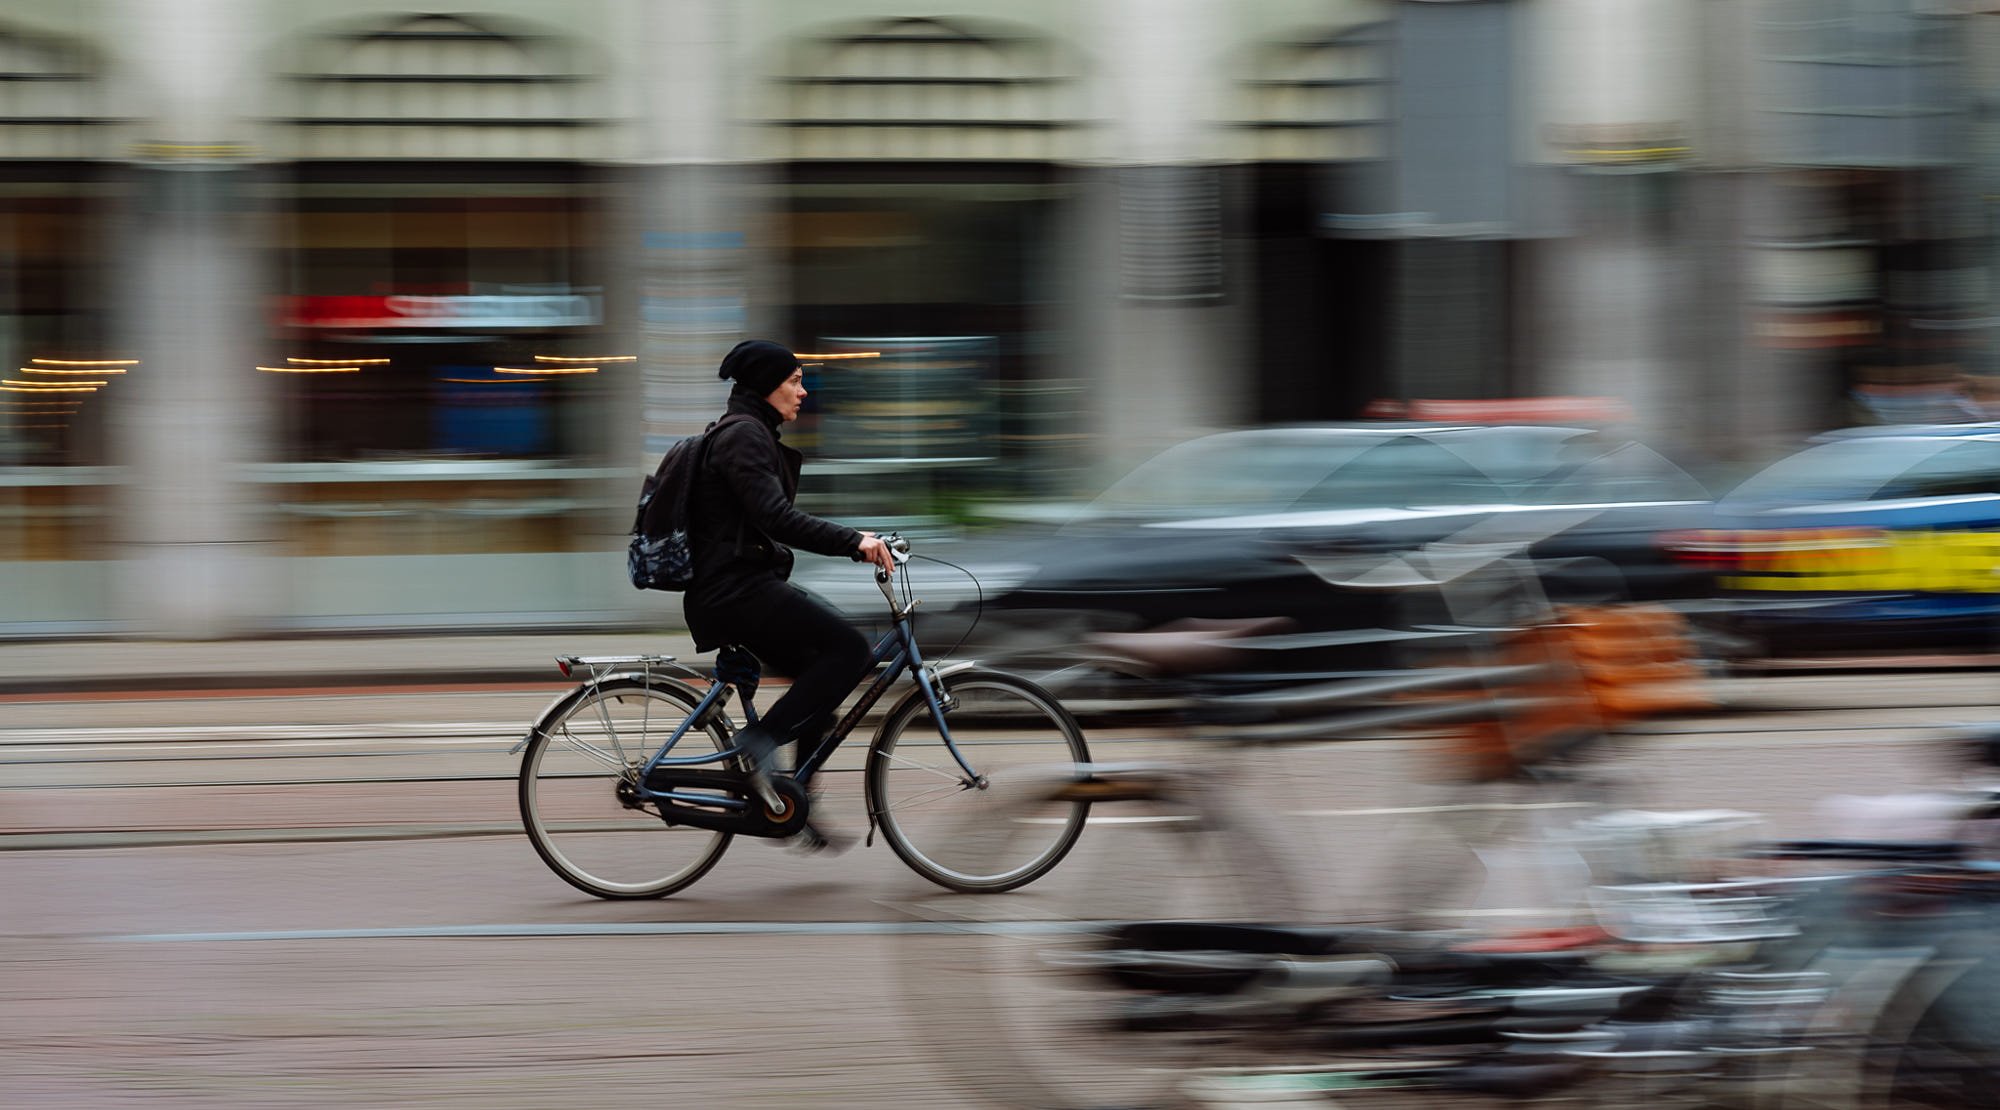 амстердам, amsterdam, netherlands, голландия, велосипед, движение, скорость, Александър Киричев